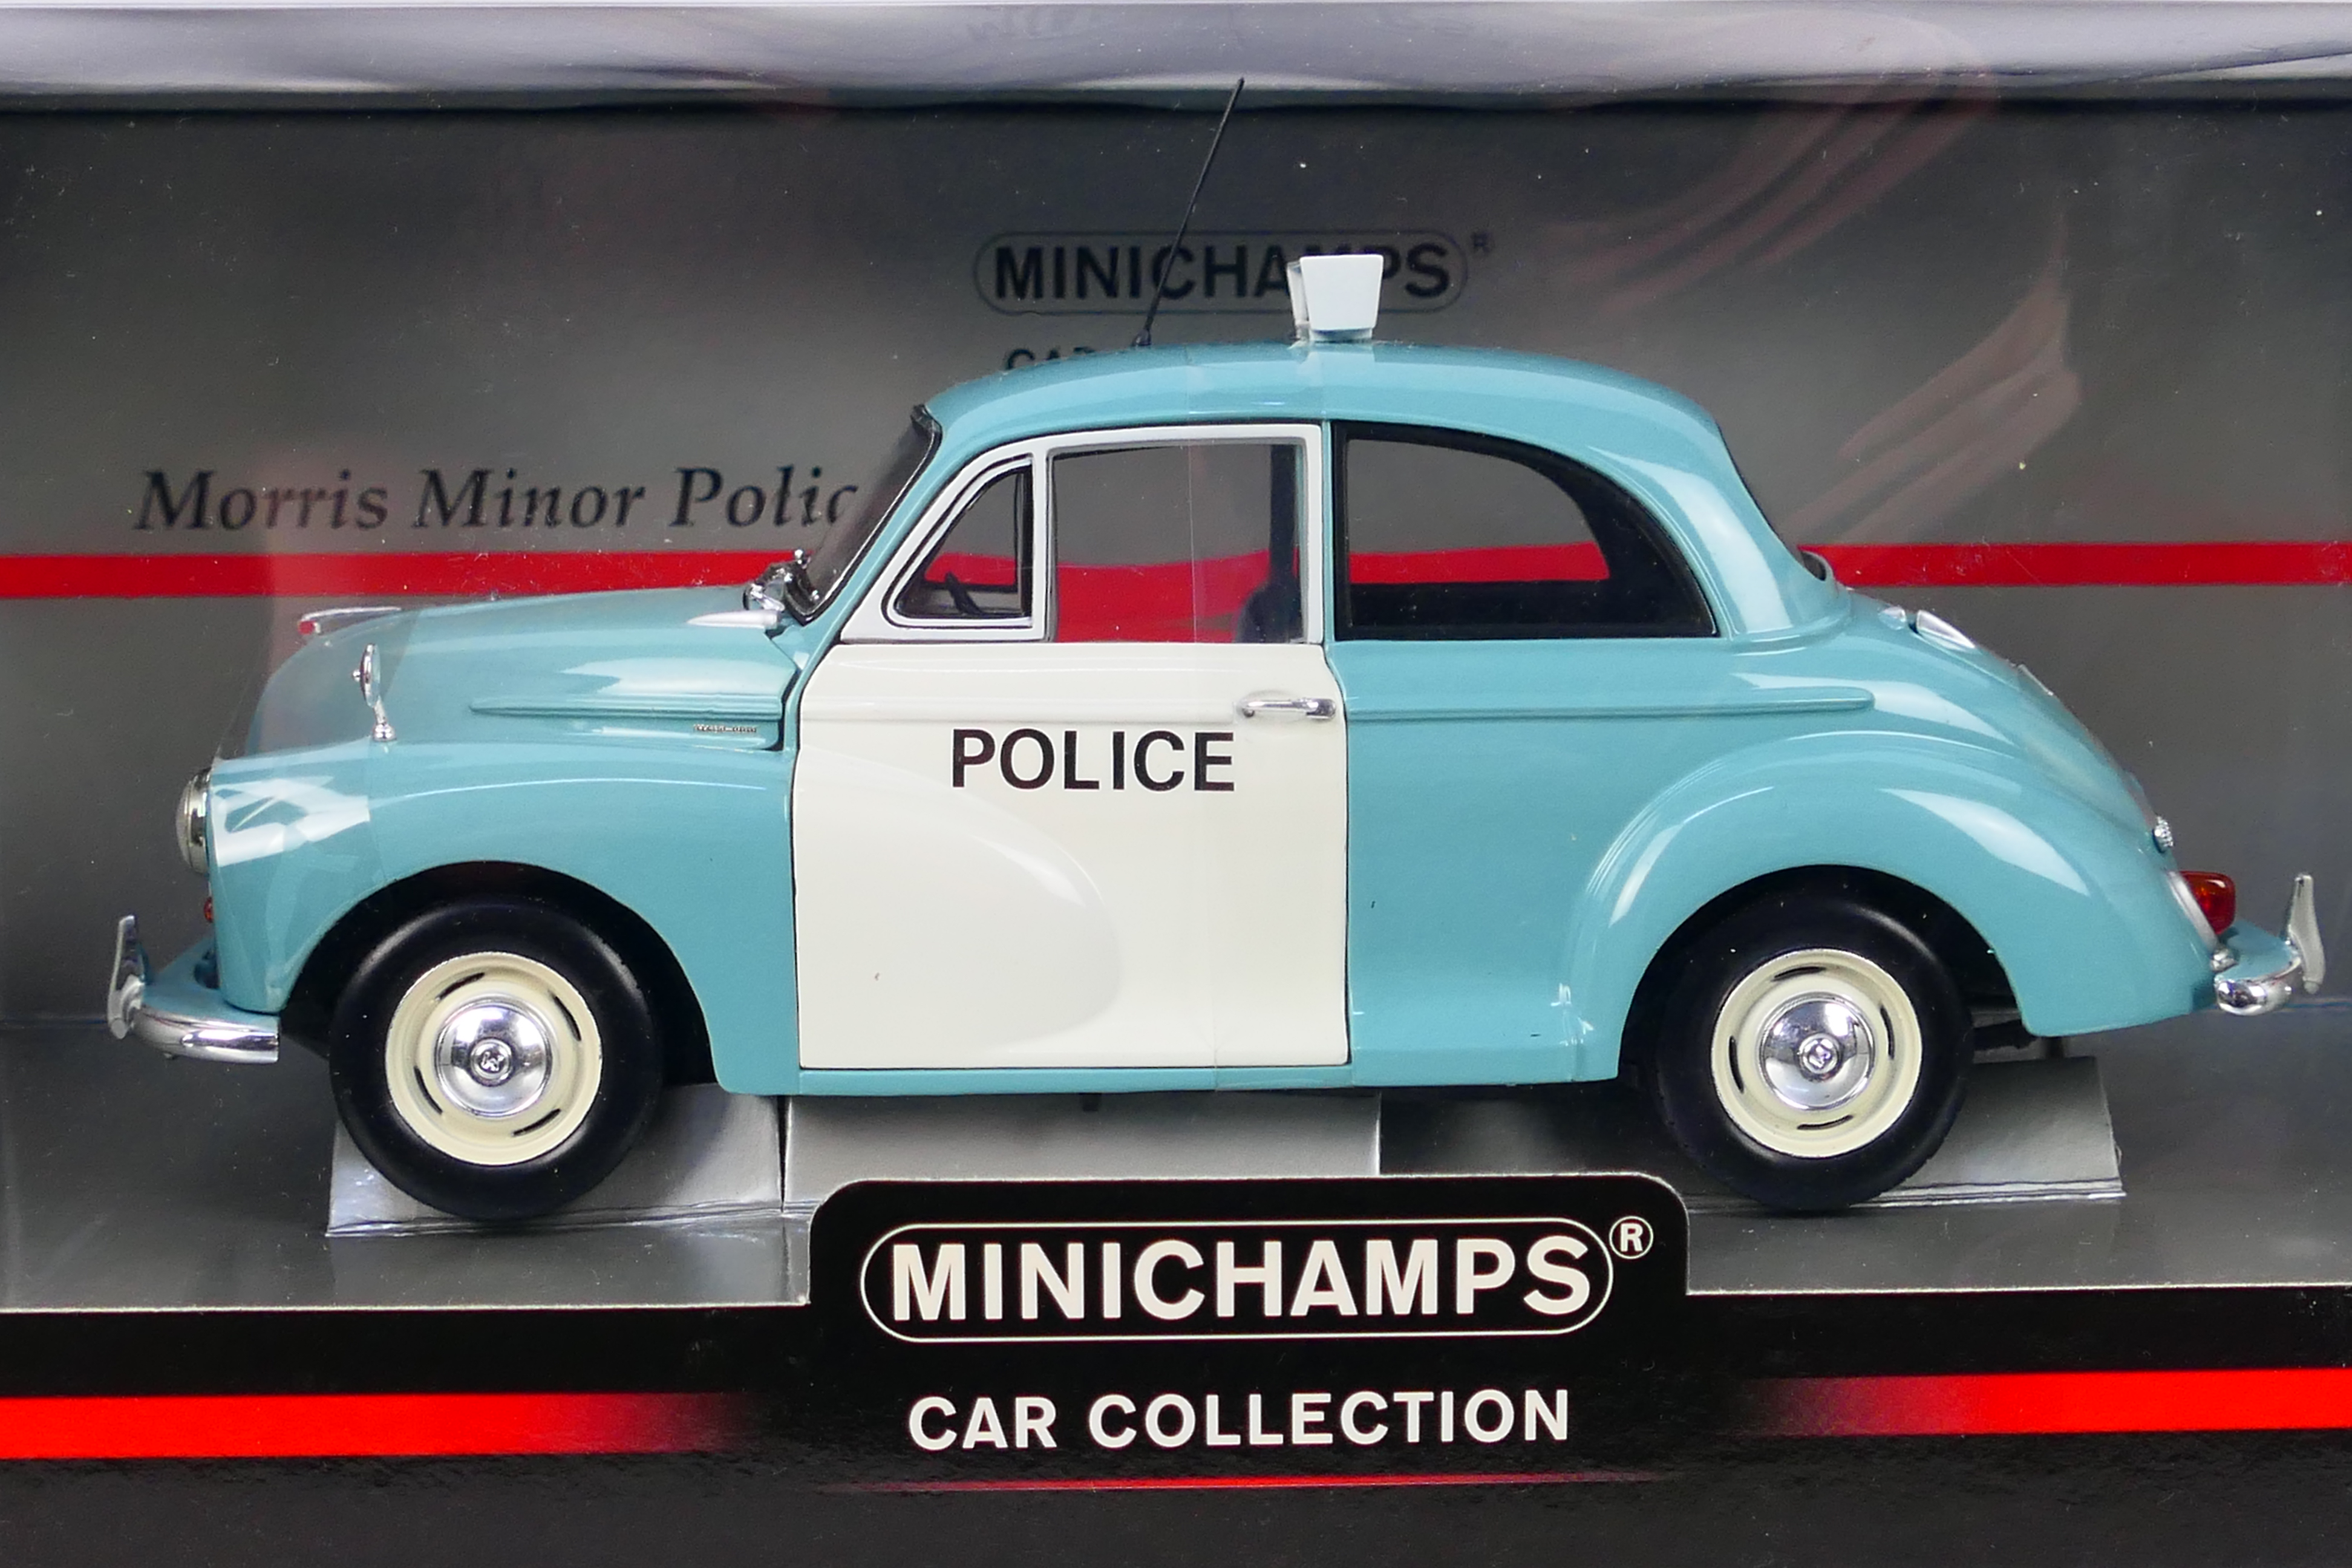 Minichamps - A boxed Minichamps #150137090 1:18 scale Morris Minor Police Car. - Image 2 of 3